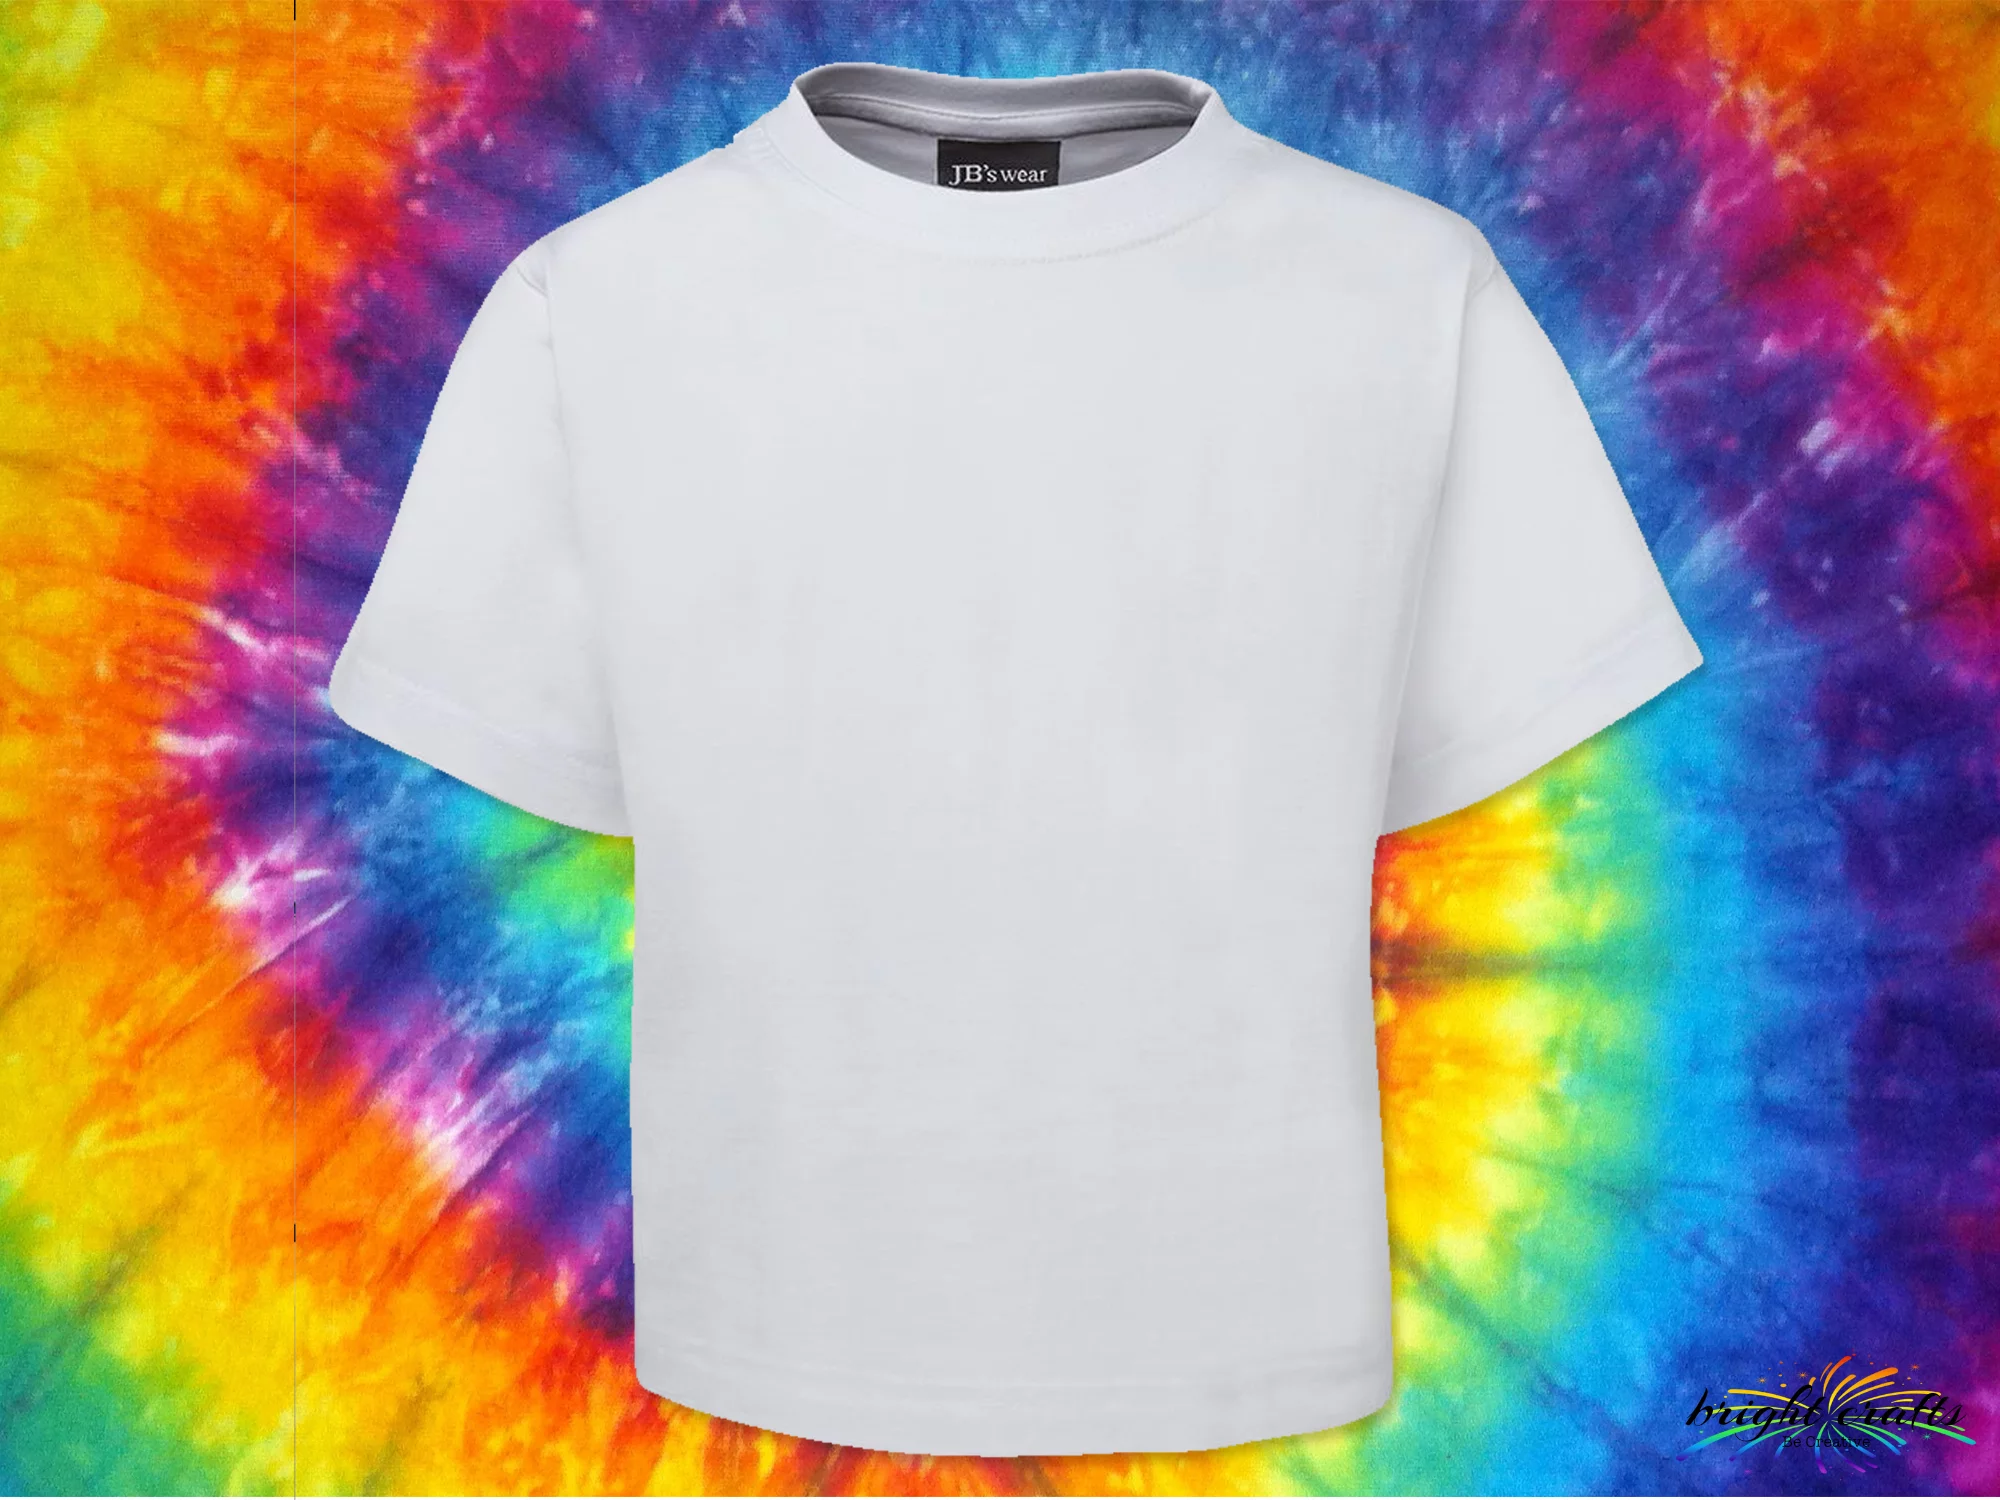 Bright Crafts white cotton kids t-shirt ready to dye